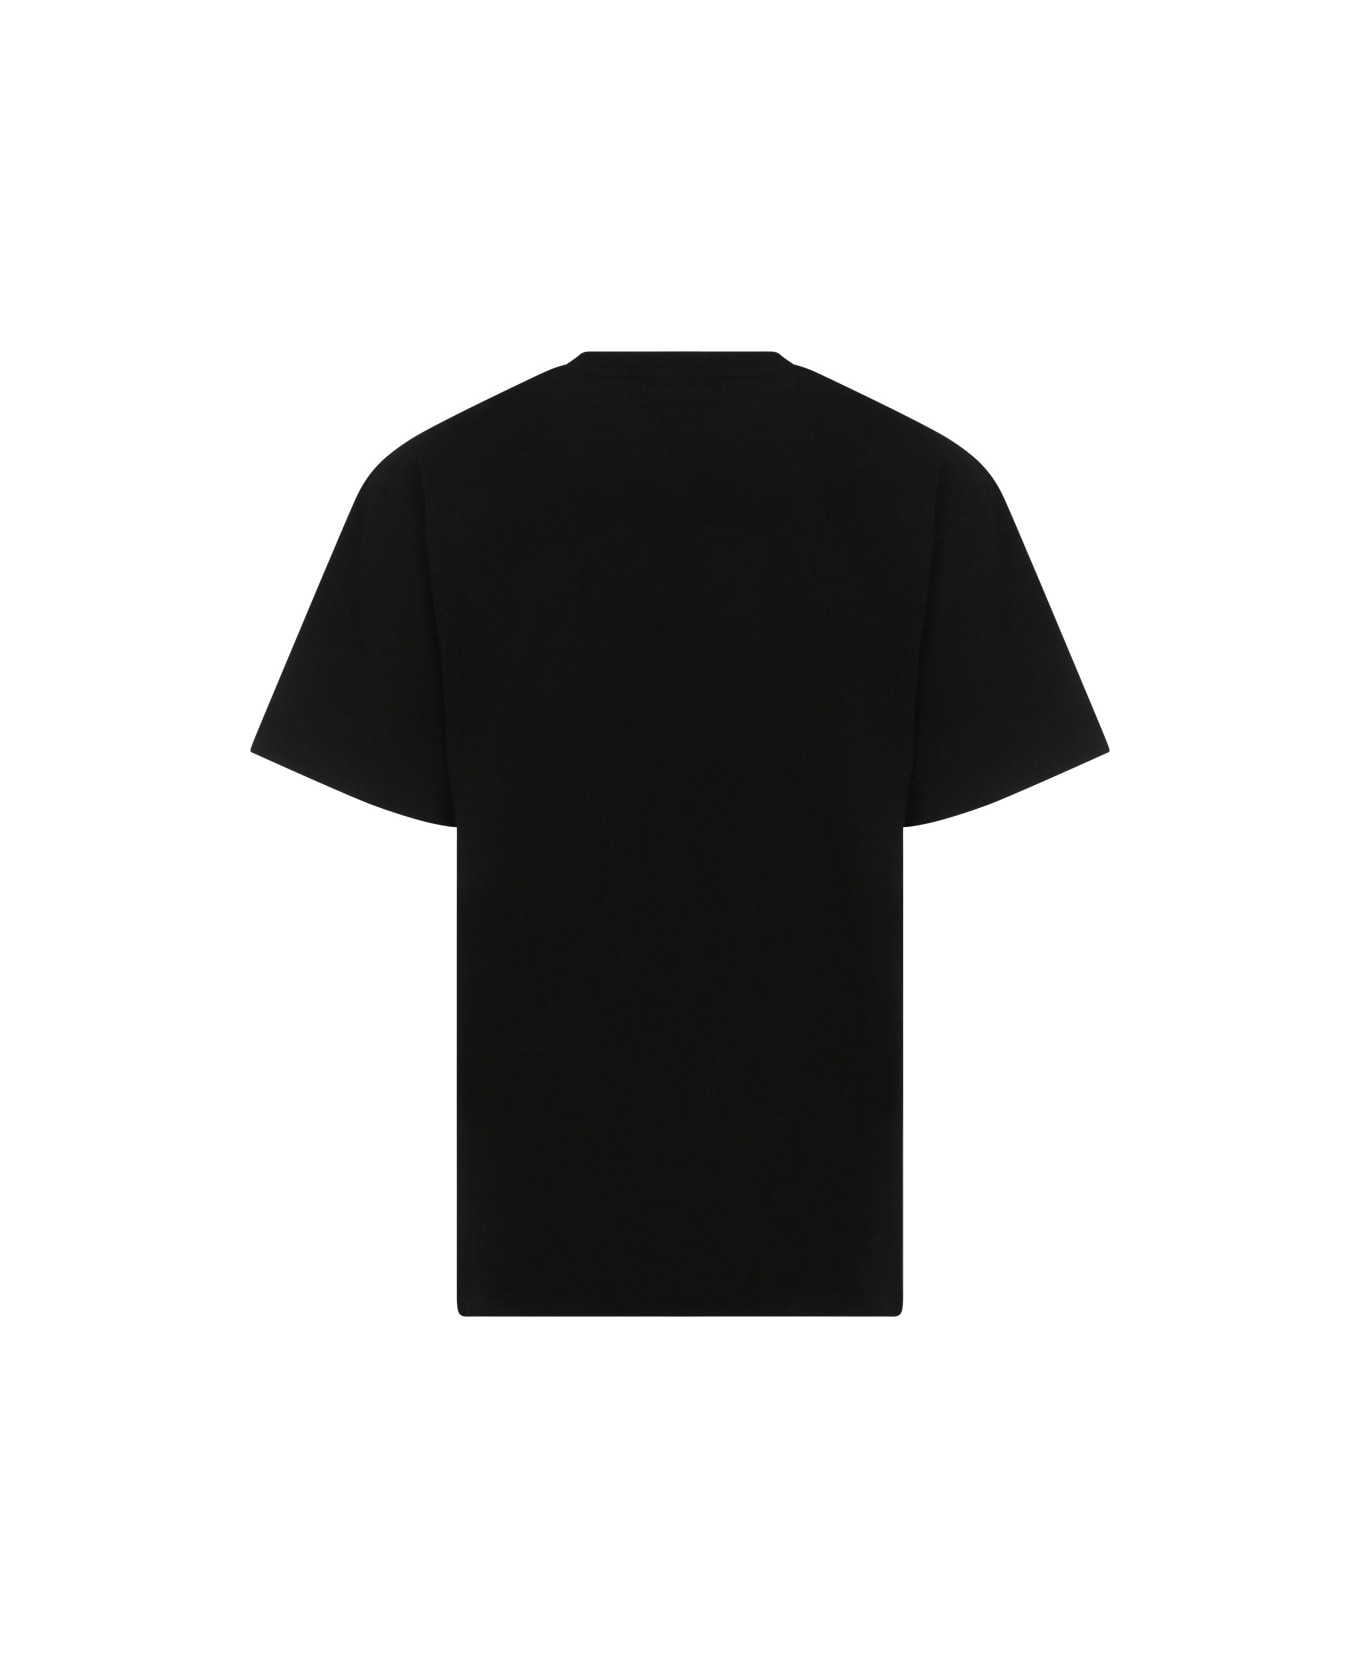 Market Smiley T-shirt - BLACK